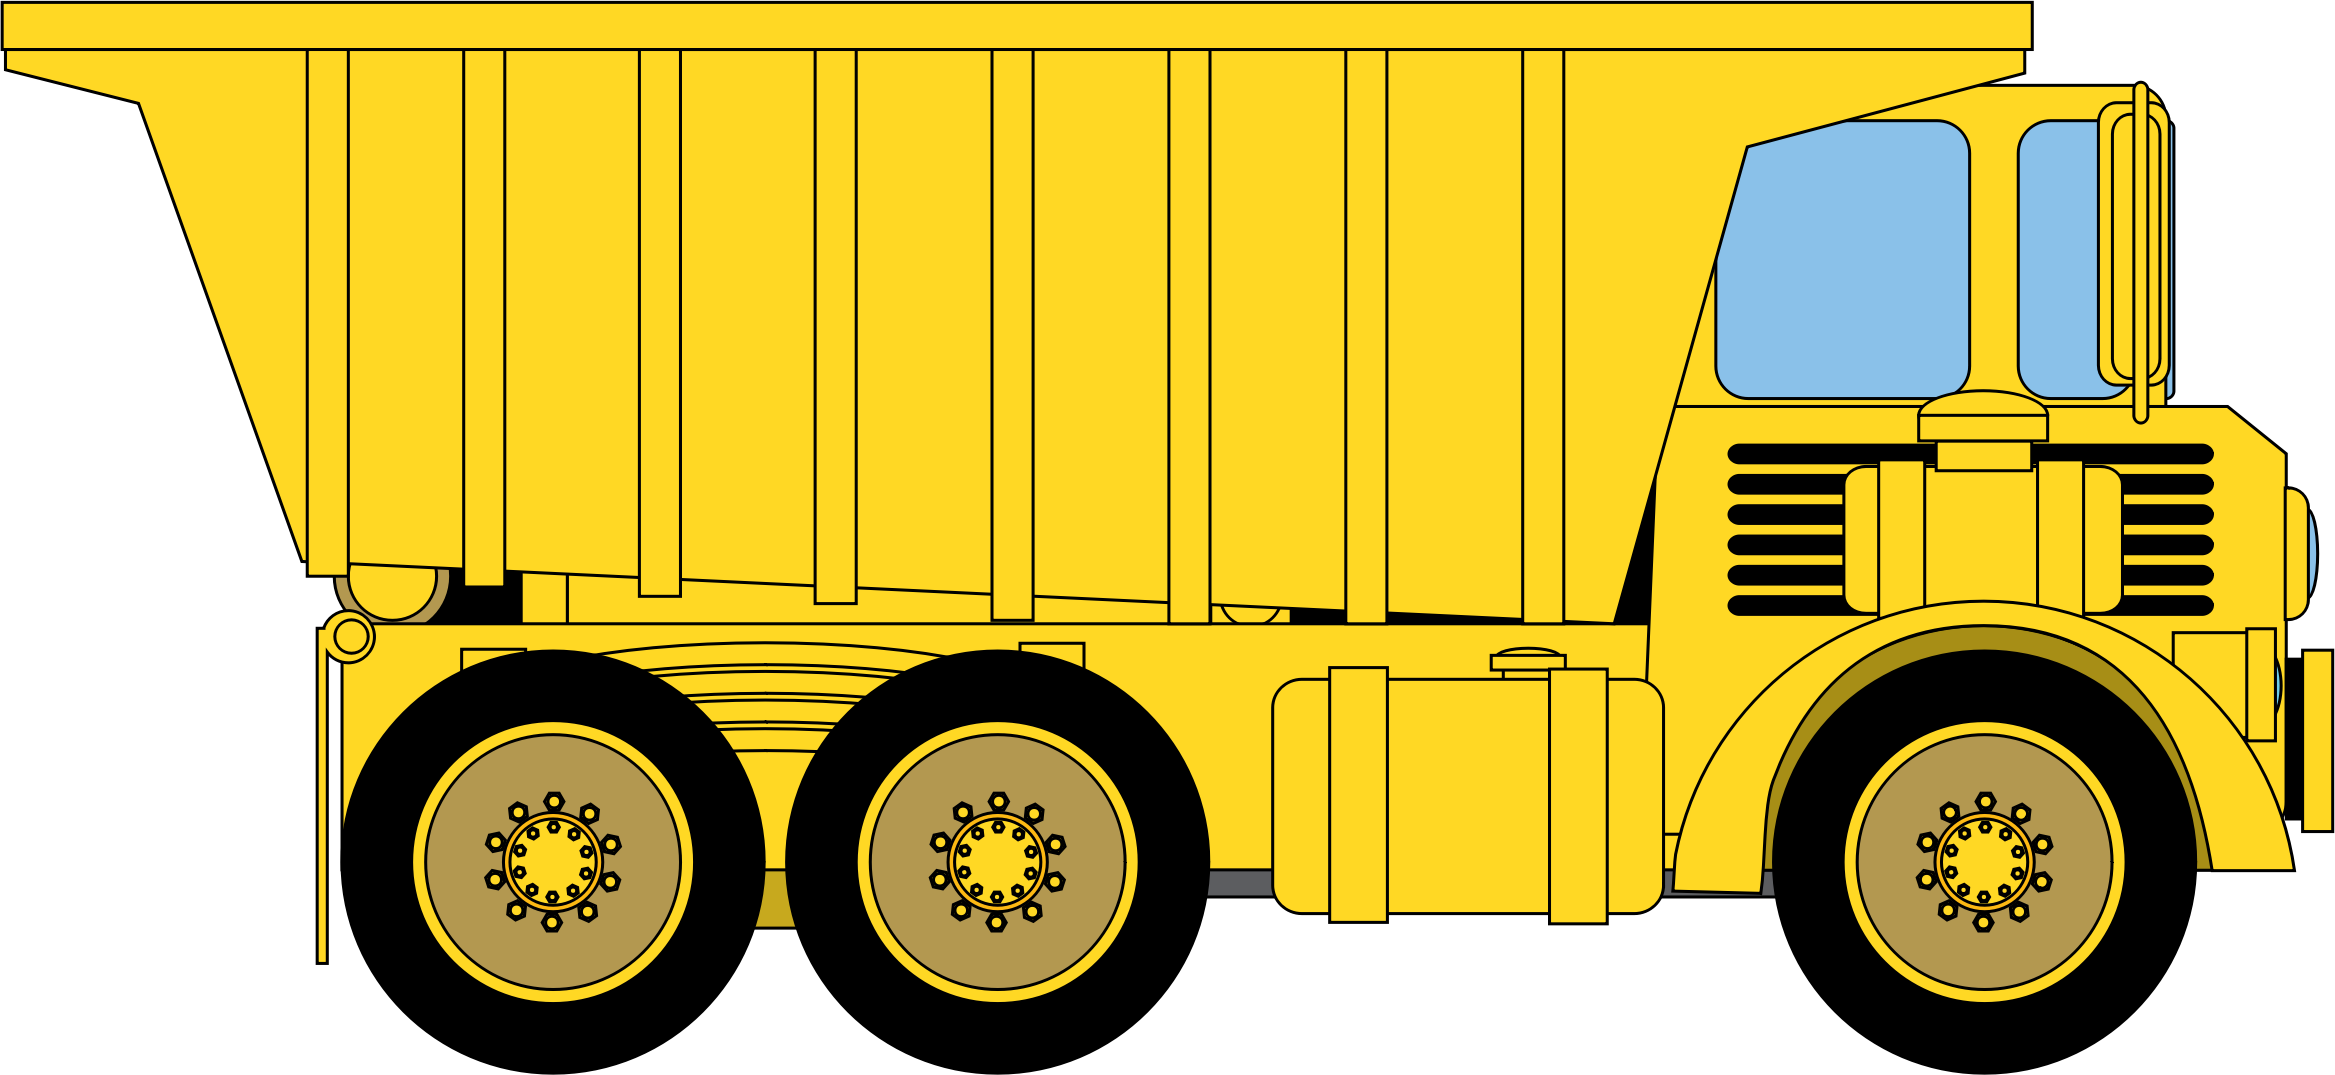 Dump truck free clipart image